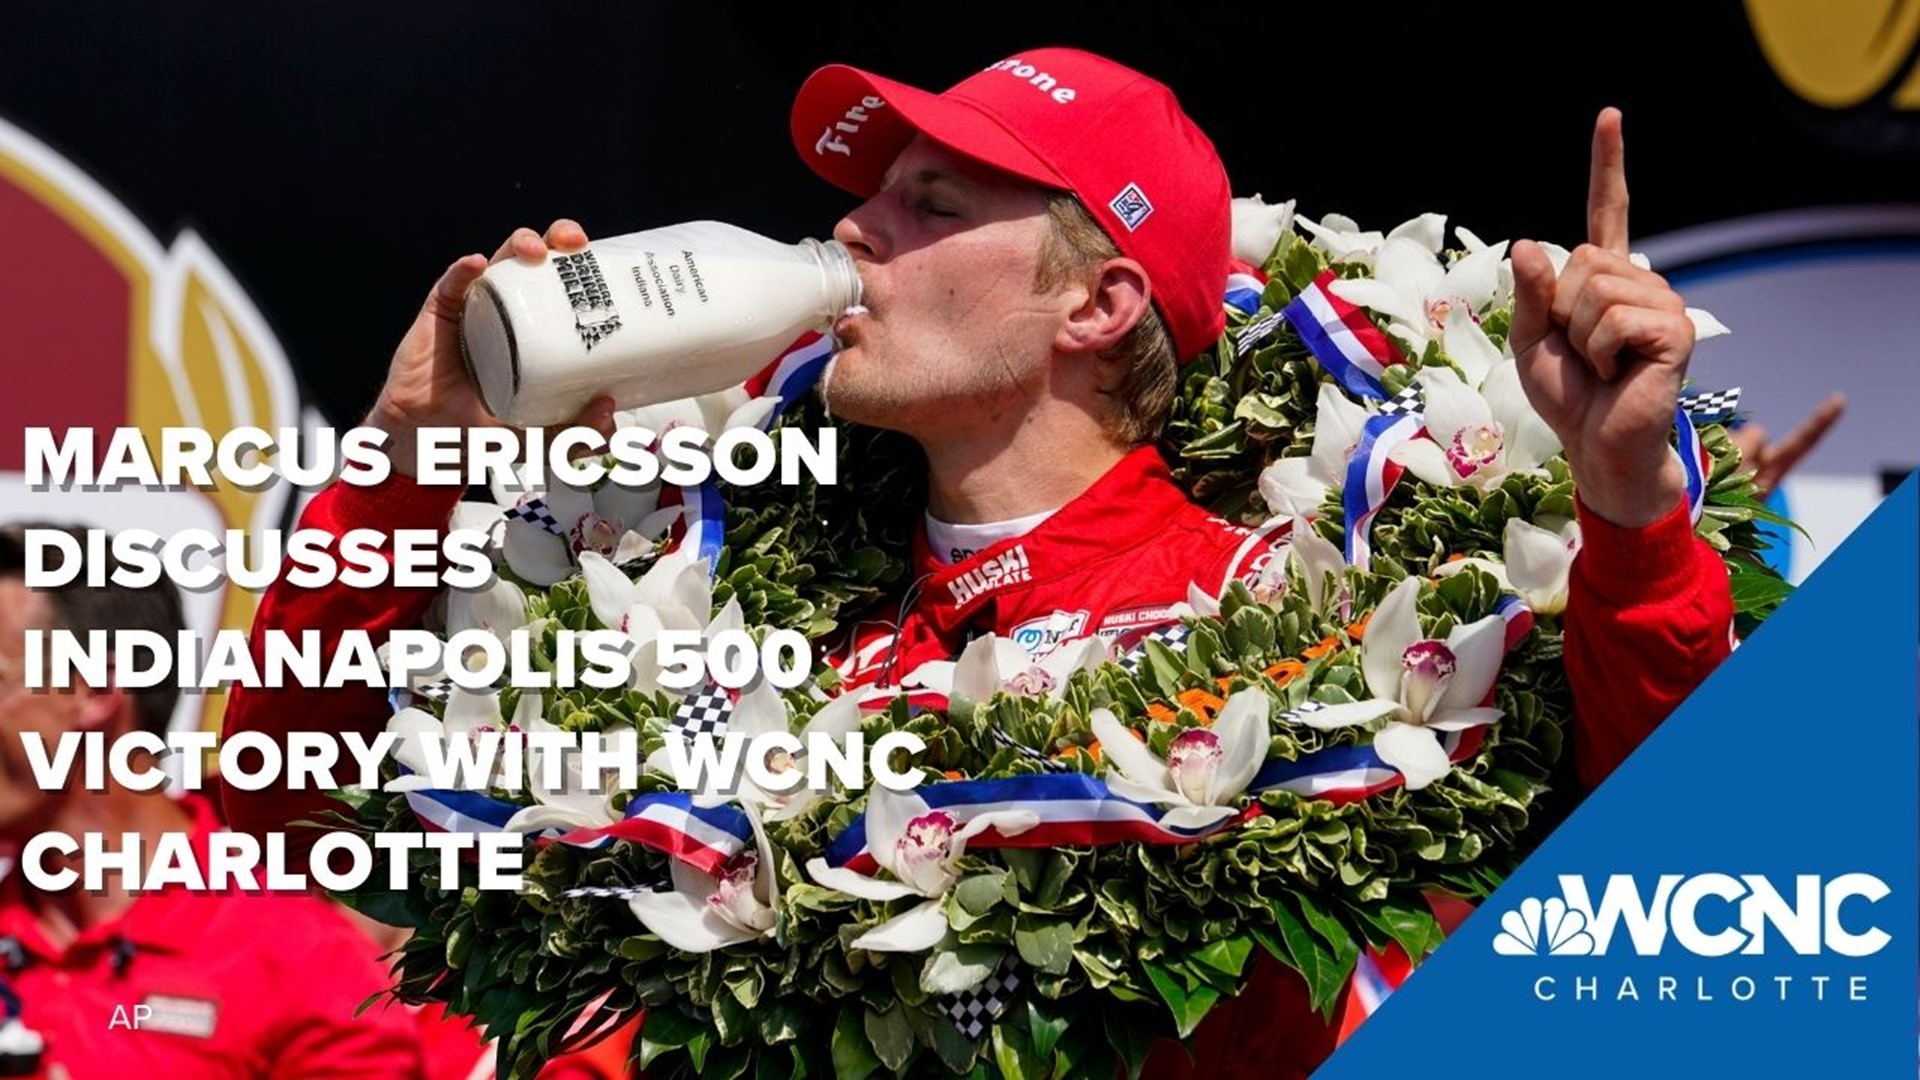 Marcus Ericsson wins 500 | wcnc.com